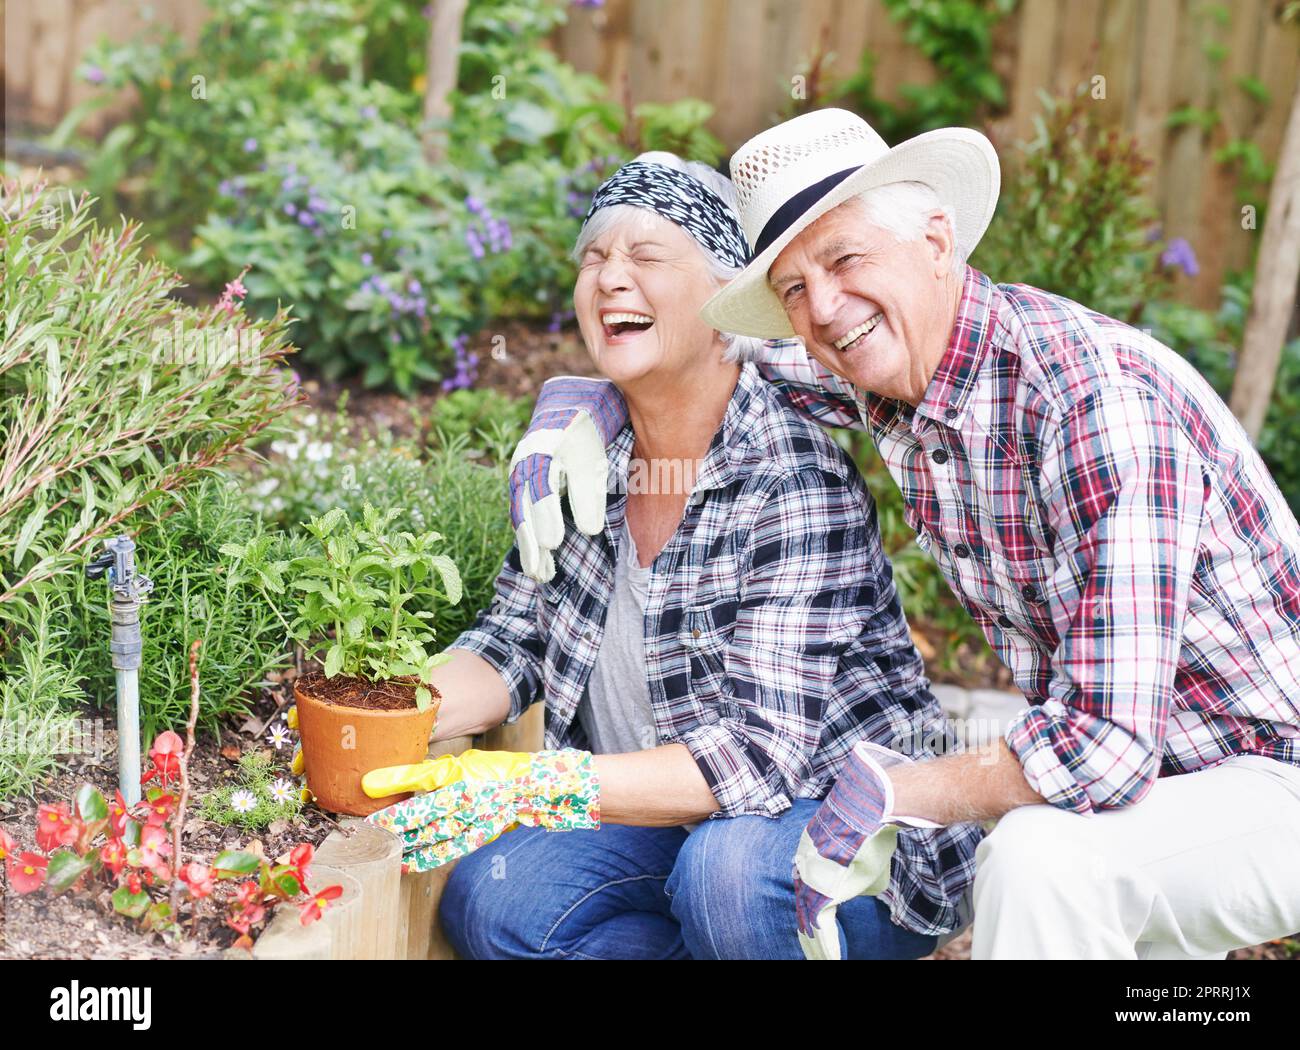 Gardening brings us so much joy. A happy senior couple busy gardening in their back yard. Stock Photo